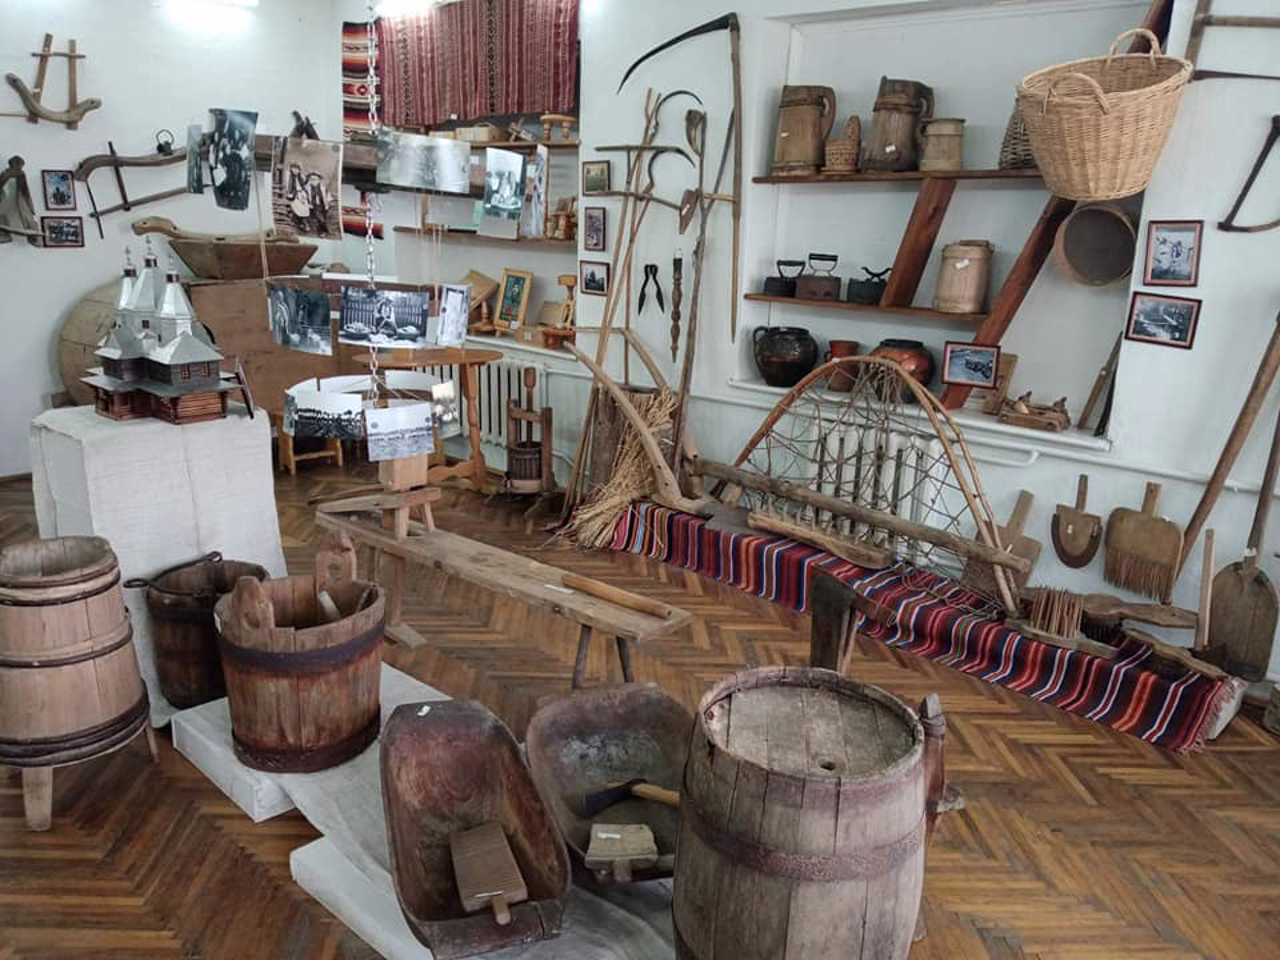 Historical and Local Lore museum of Oleksa Dovbush, Pechenizhyn